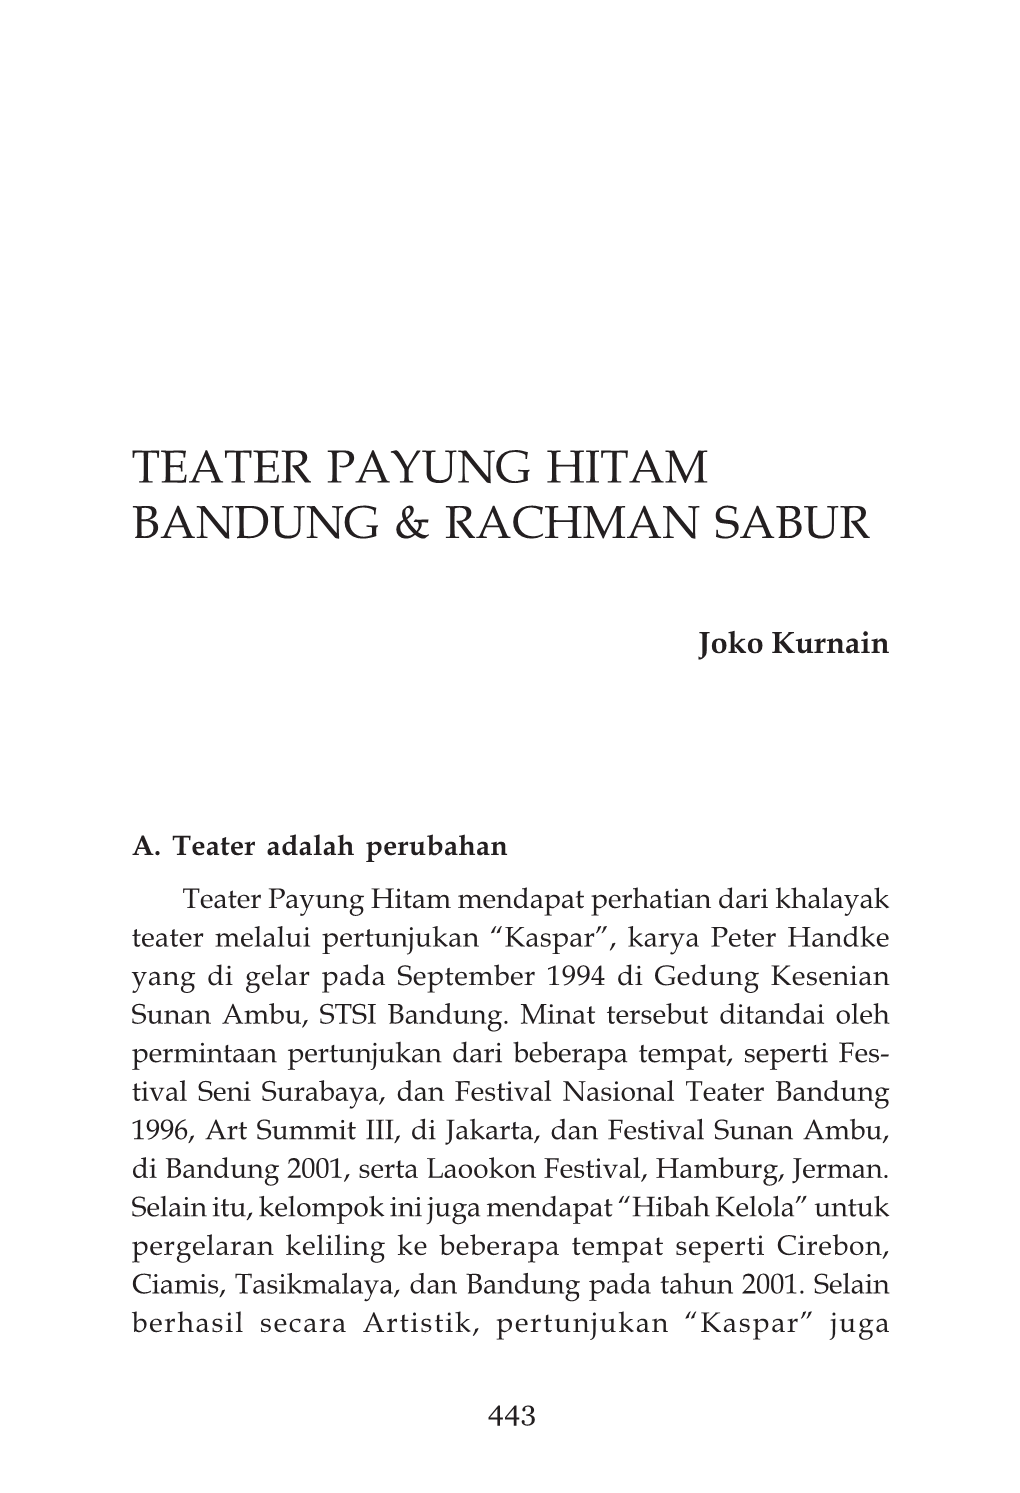 Teater Payung Hitam Bandung & Rachman Sabur